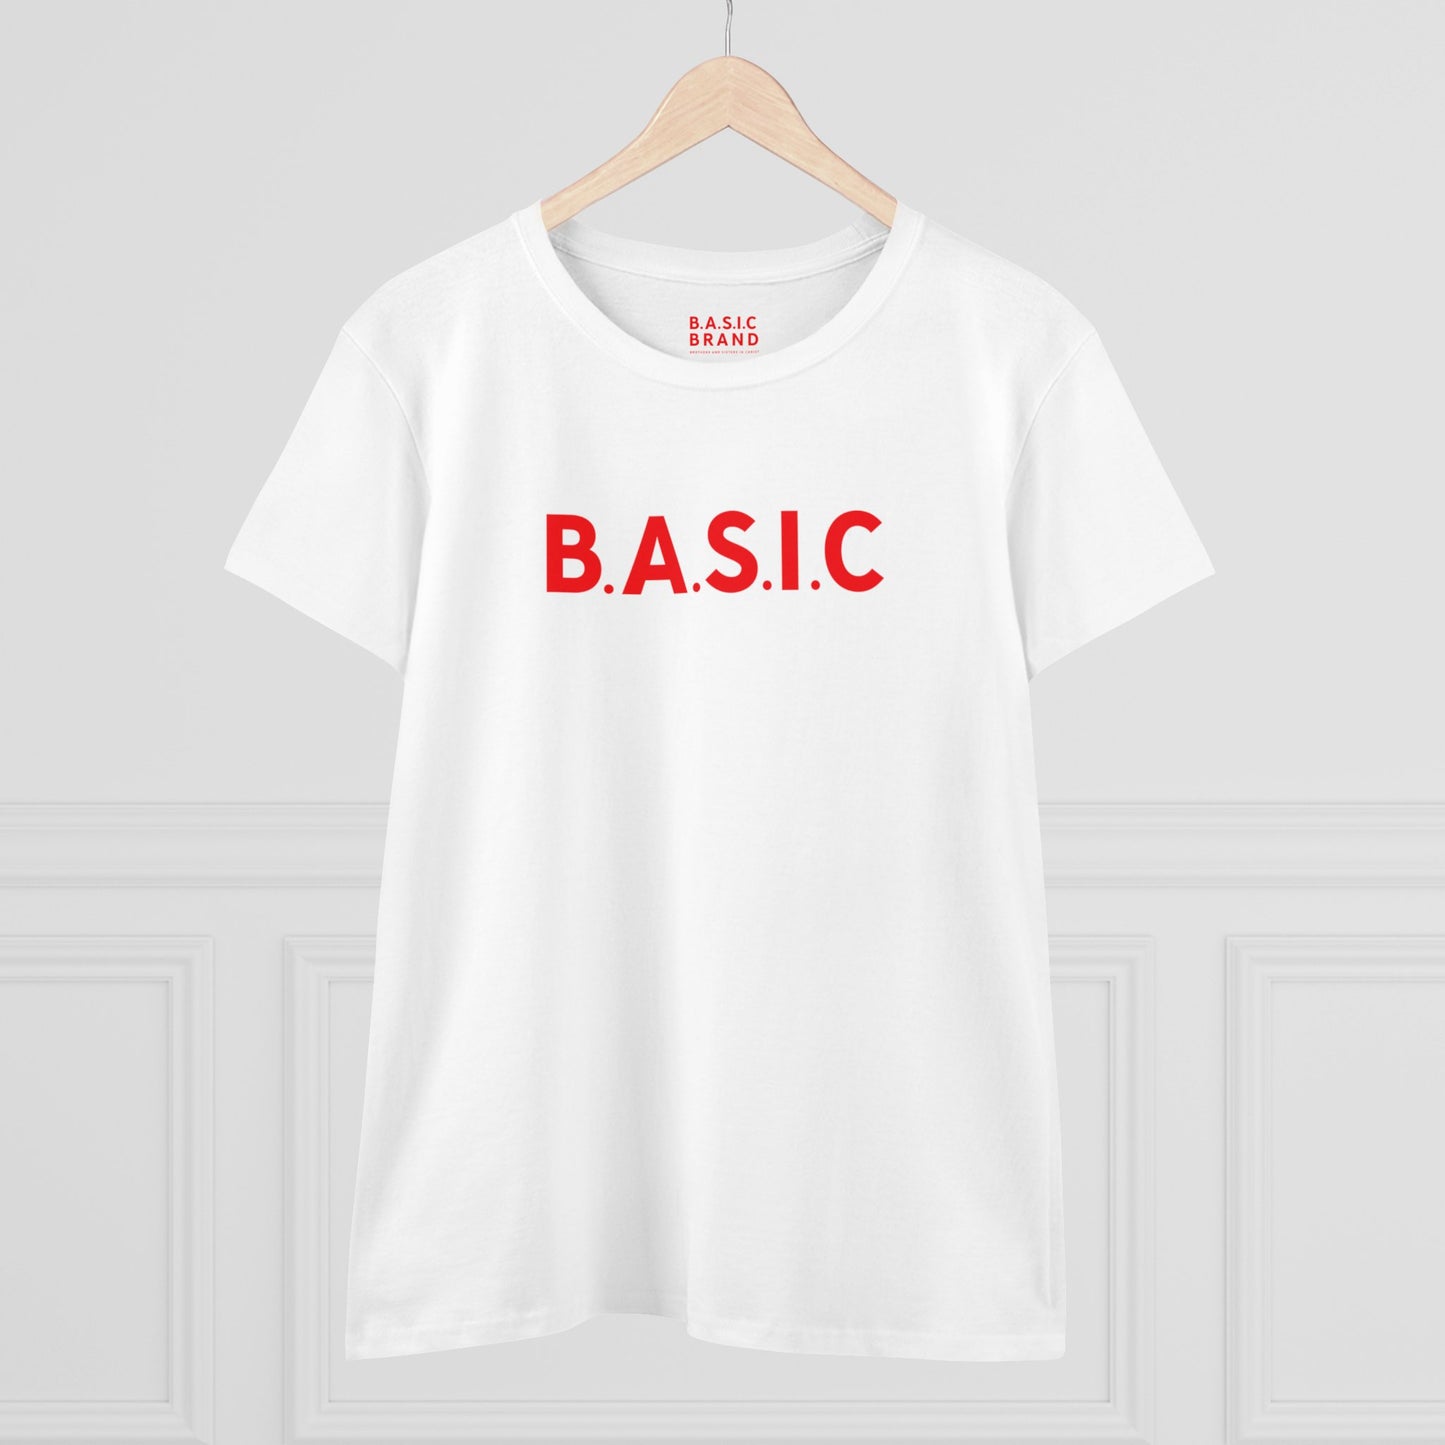 Women's B.A.S.I.C "Medium Sized Logo" Red Font Tee Shirt